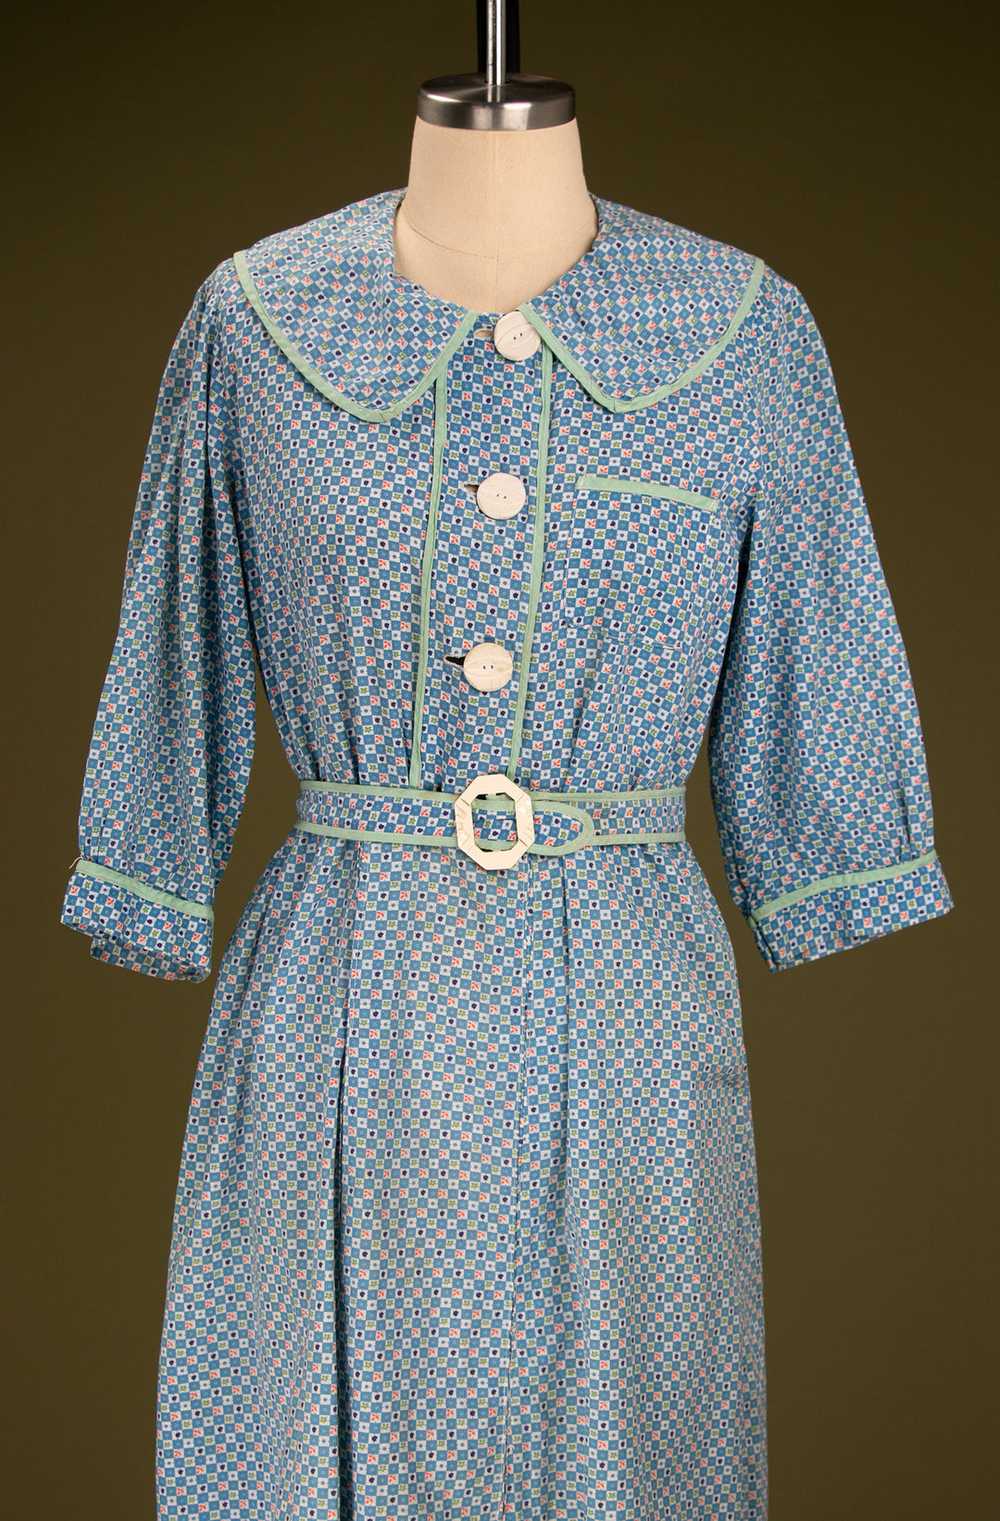 Vintage 1930's Depression Era Blue Farm Dress - image 2